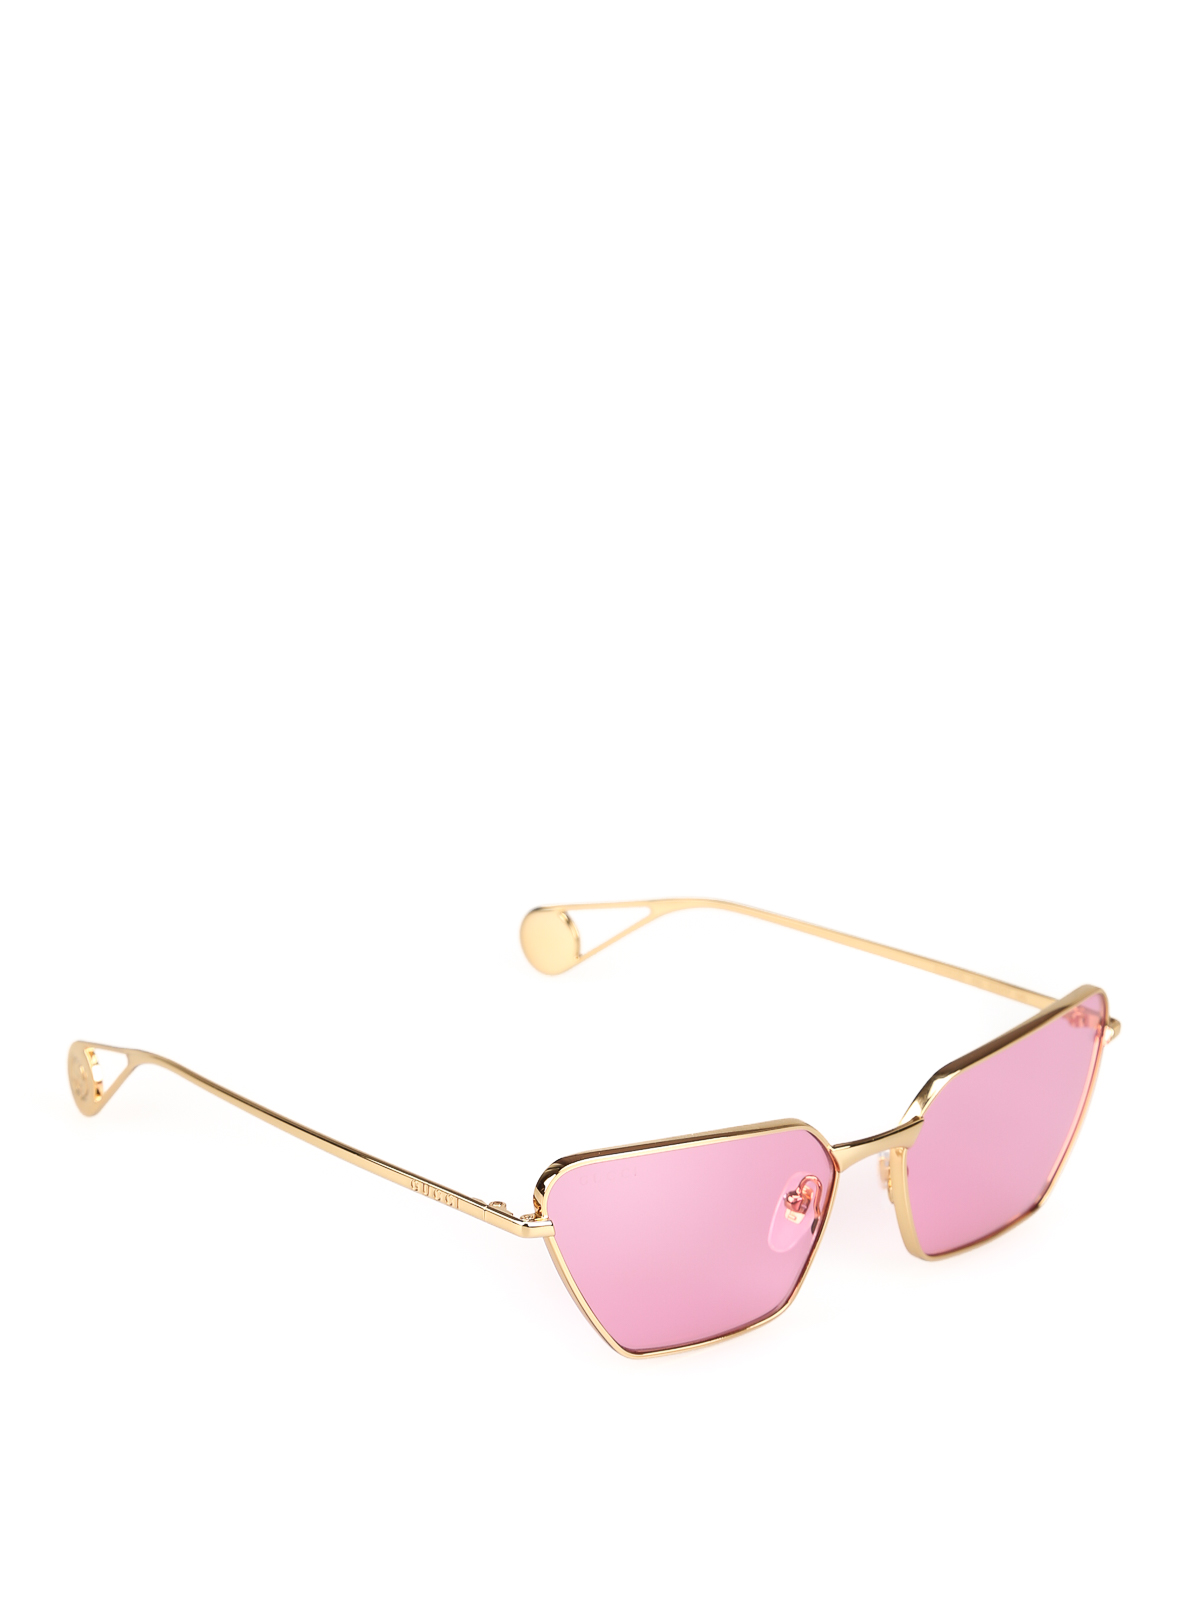 rose gold gucci sunglasses